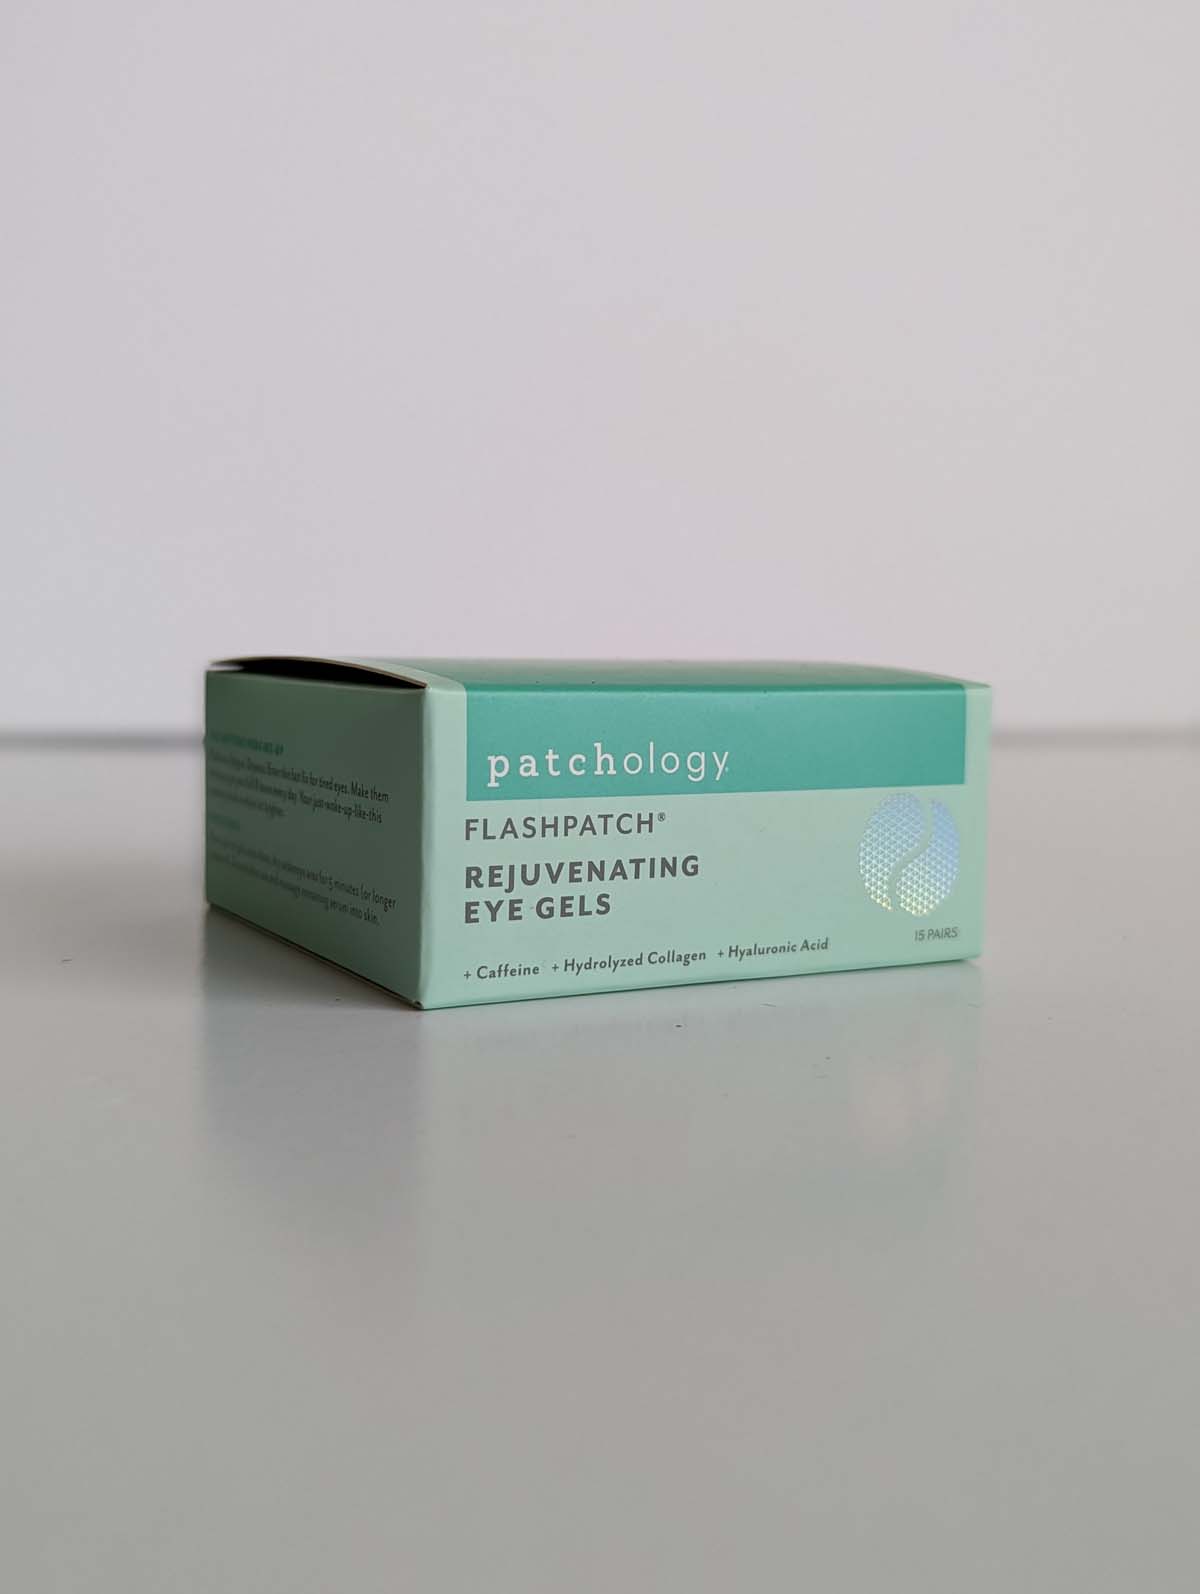 FlashPatch Restoring Night Eye Gels - Patchology